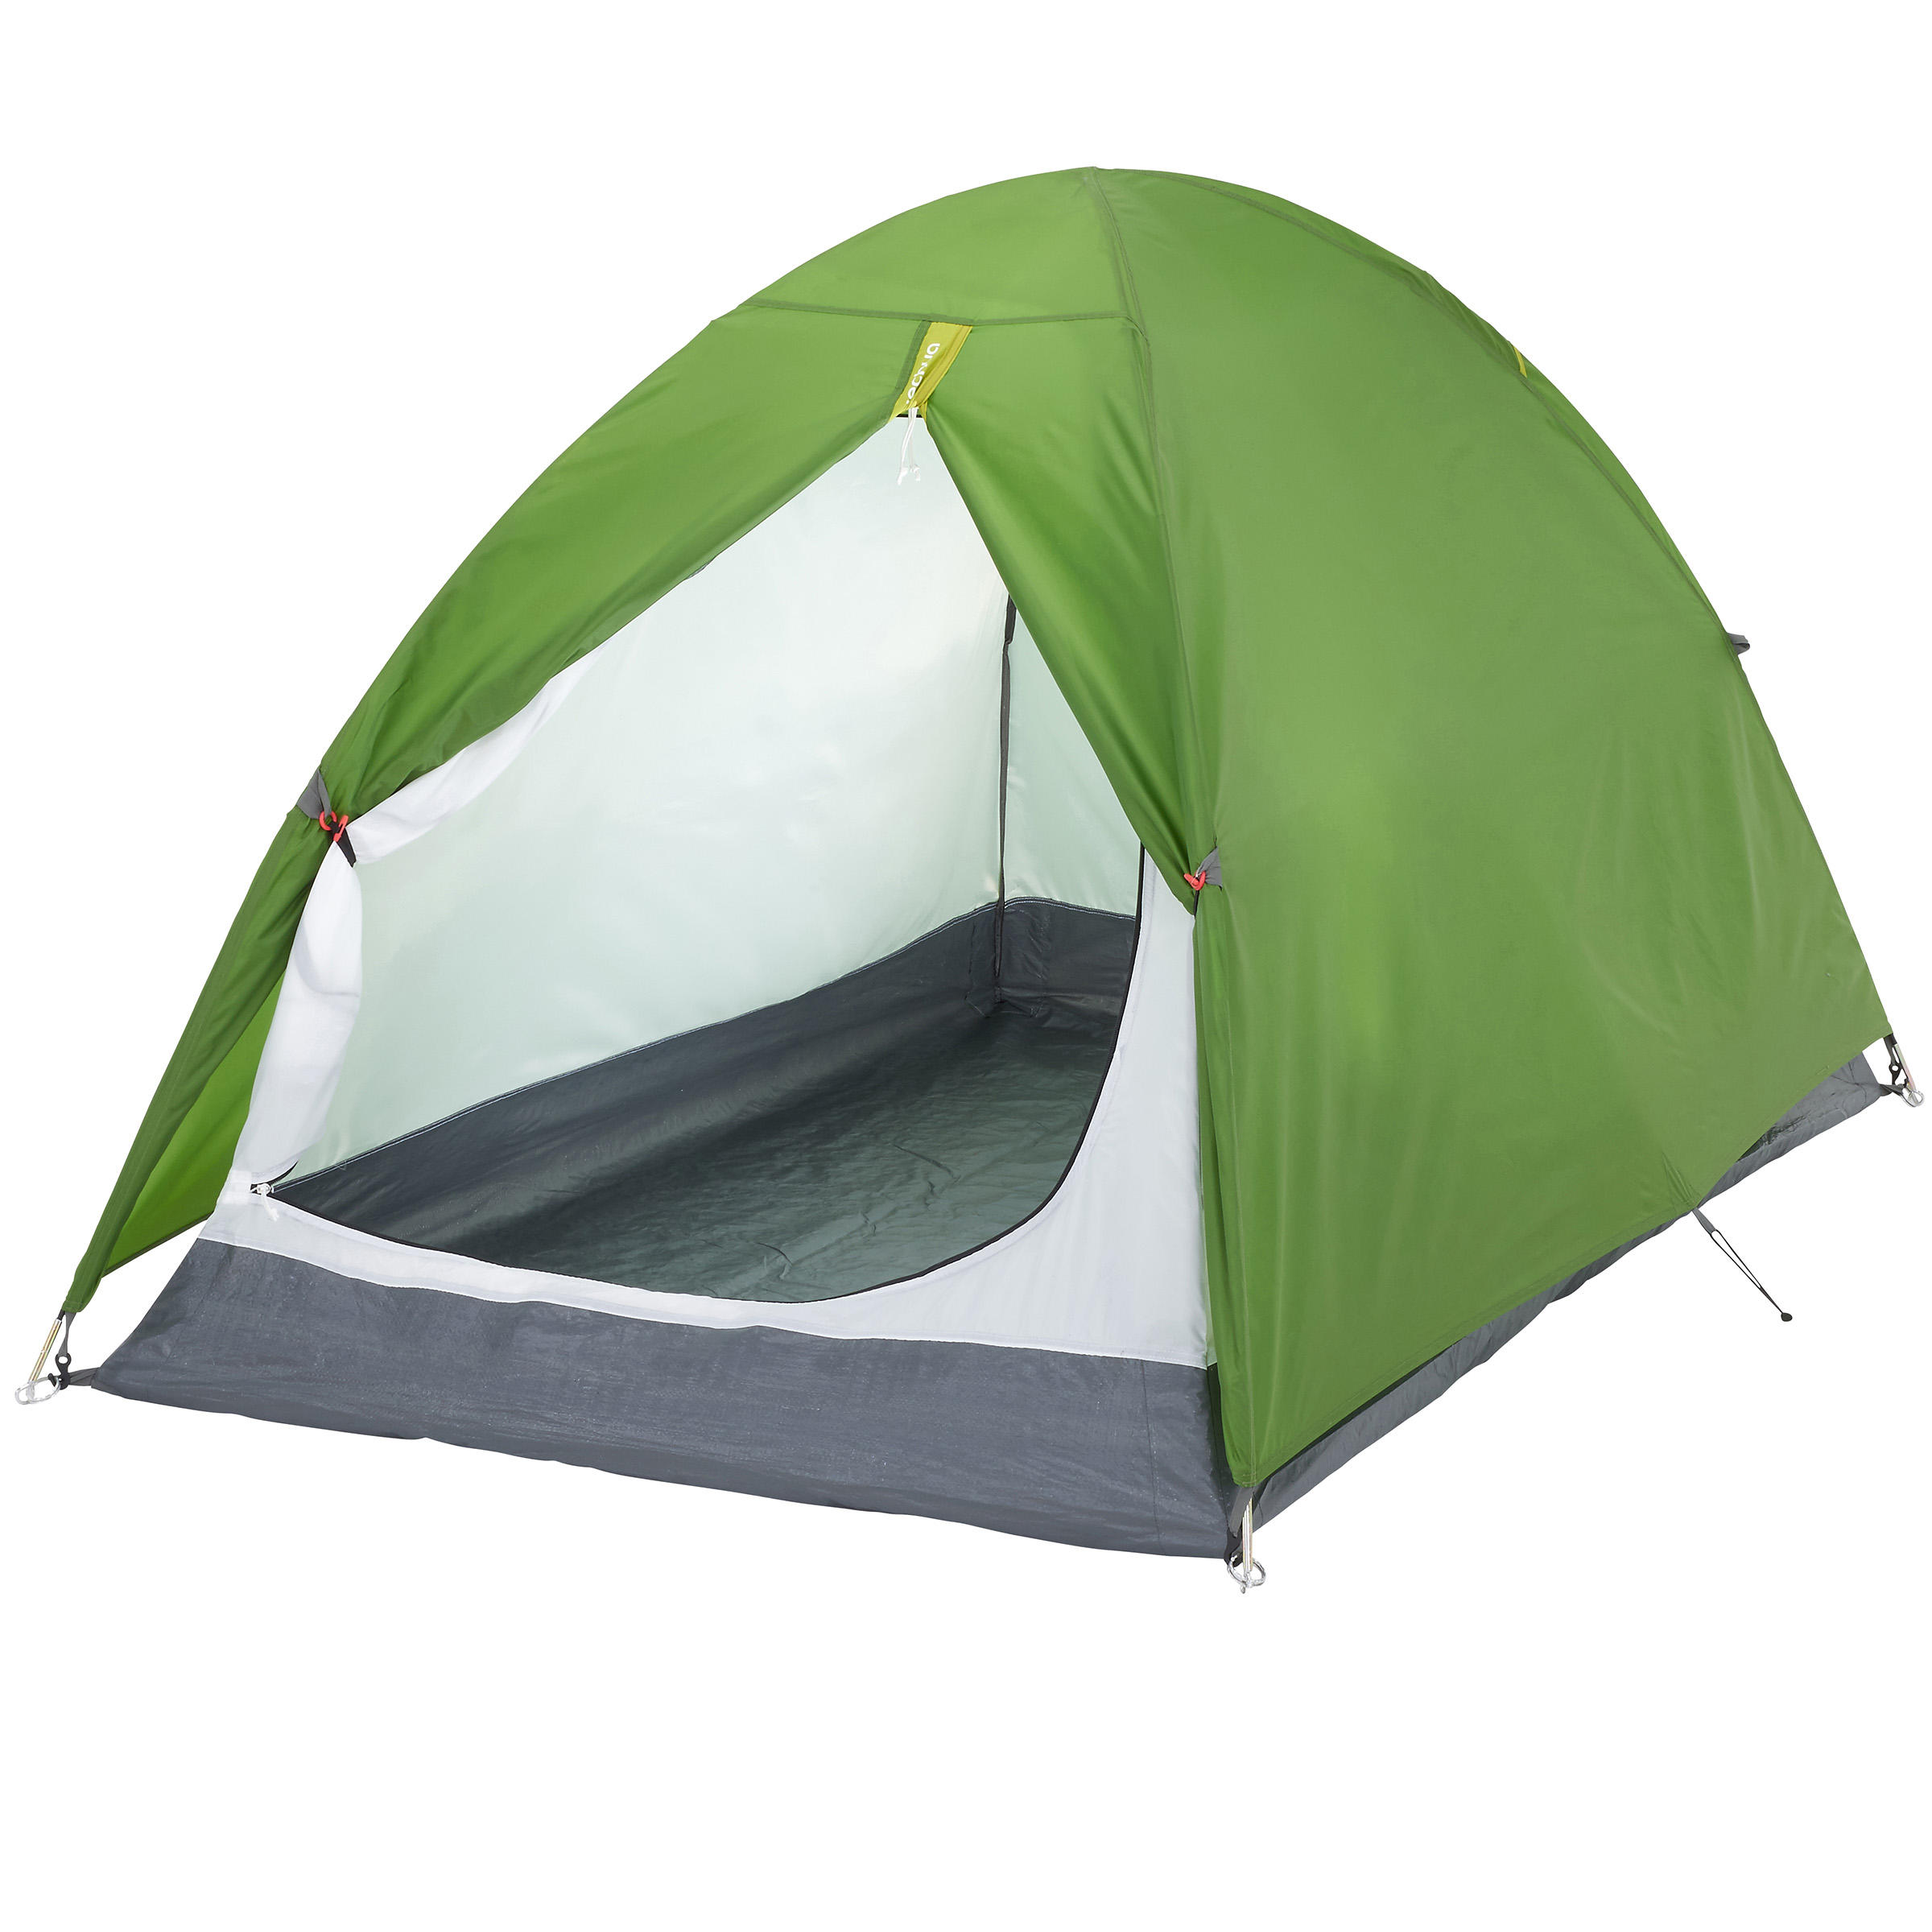 decathlon tent 1 person